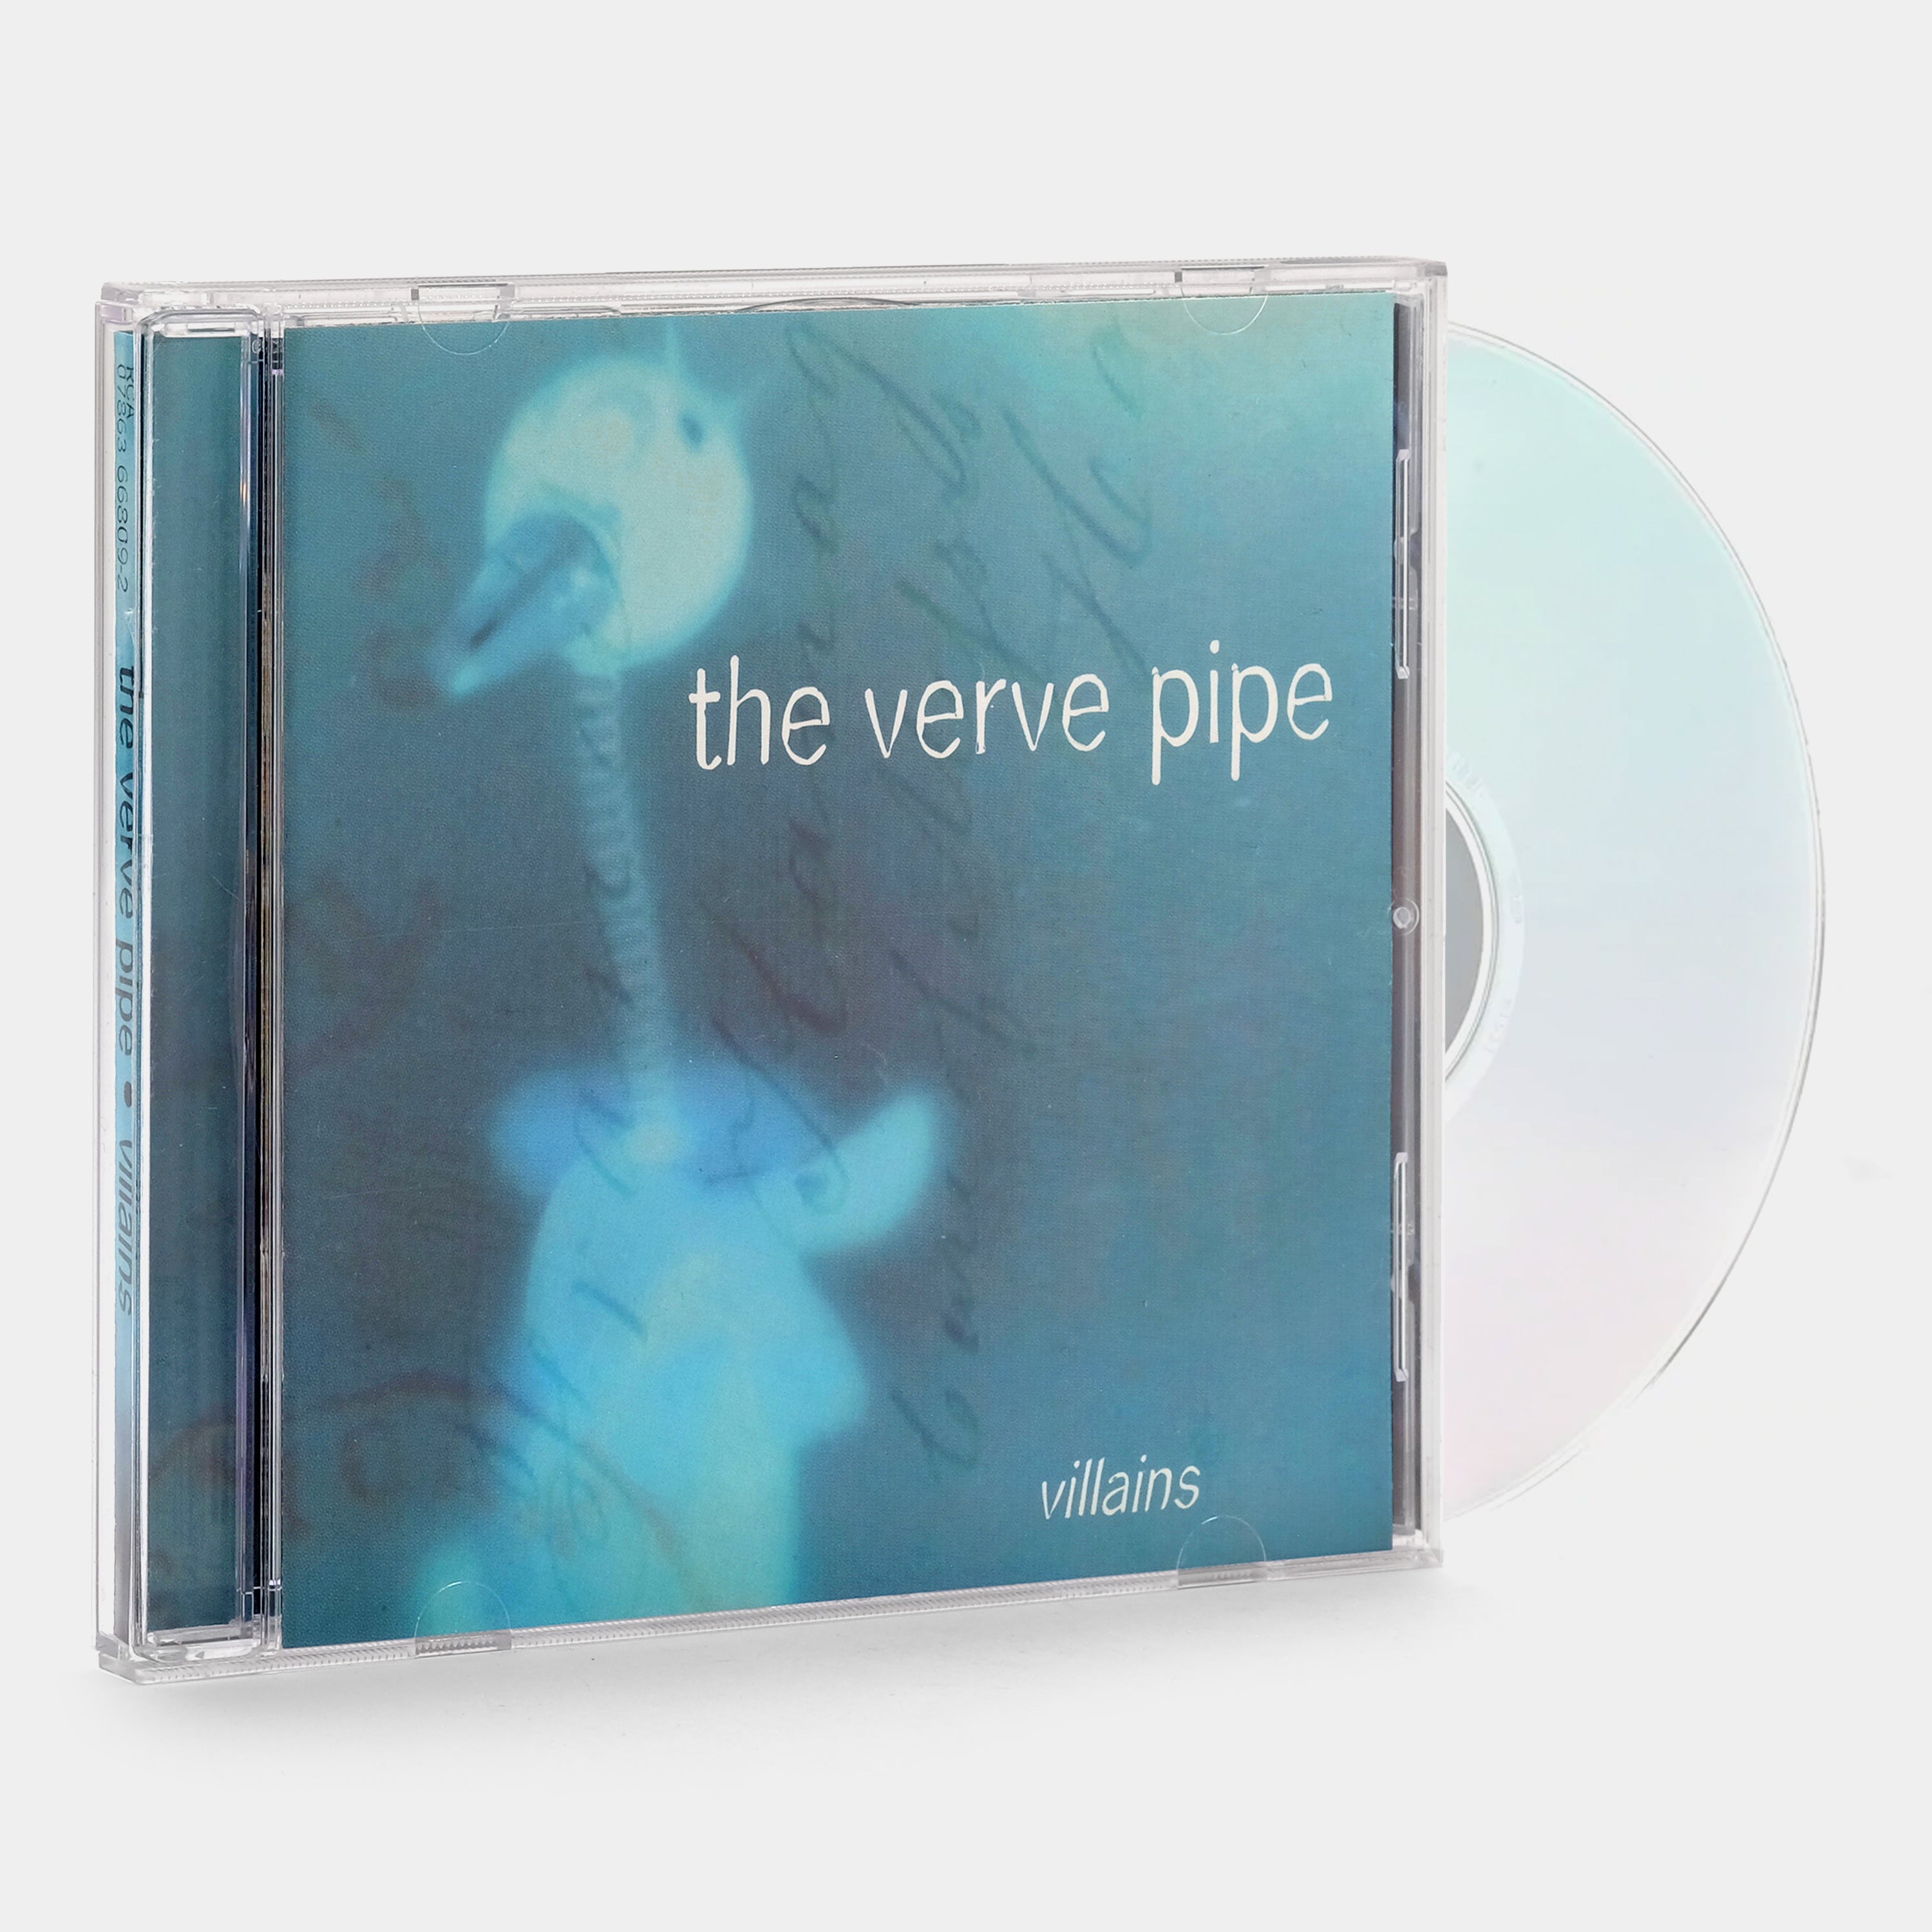 The Verve Pipe - Villians CD